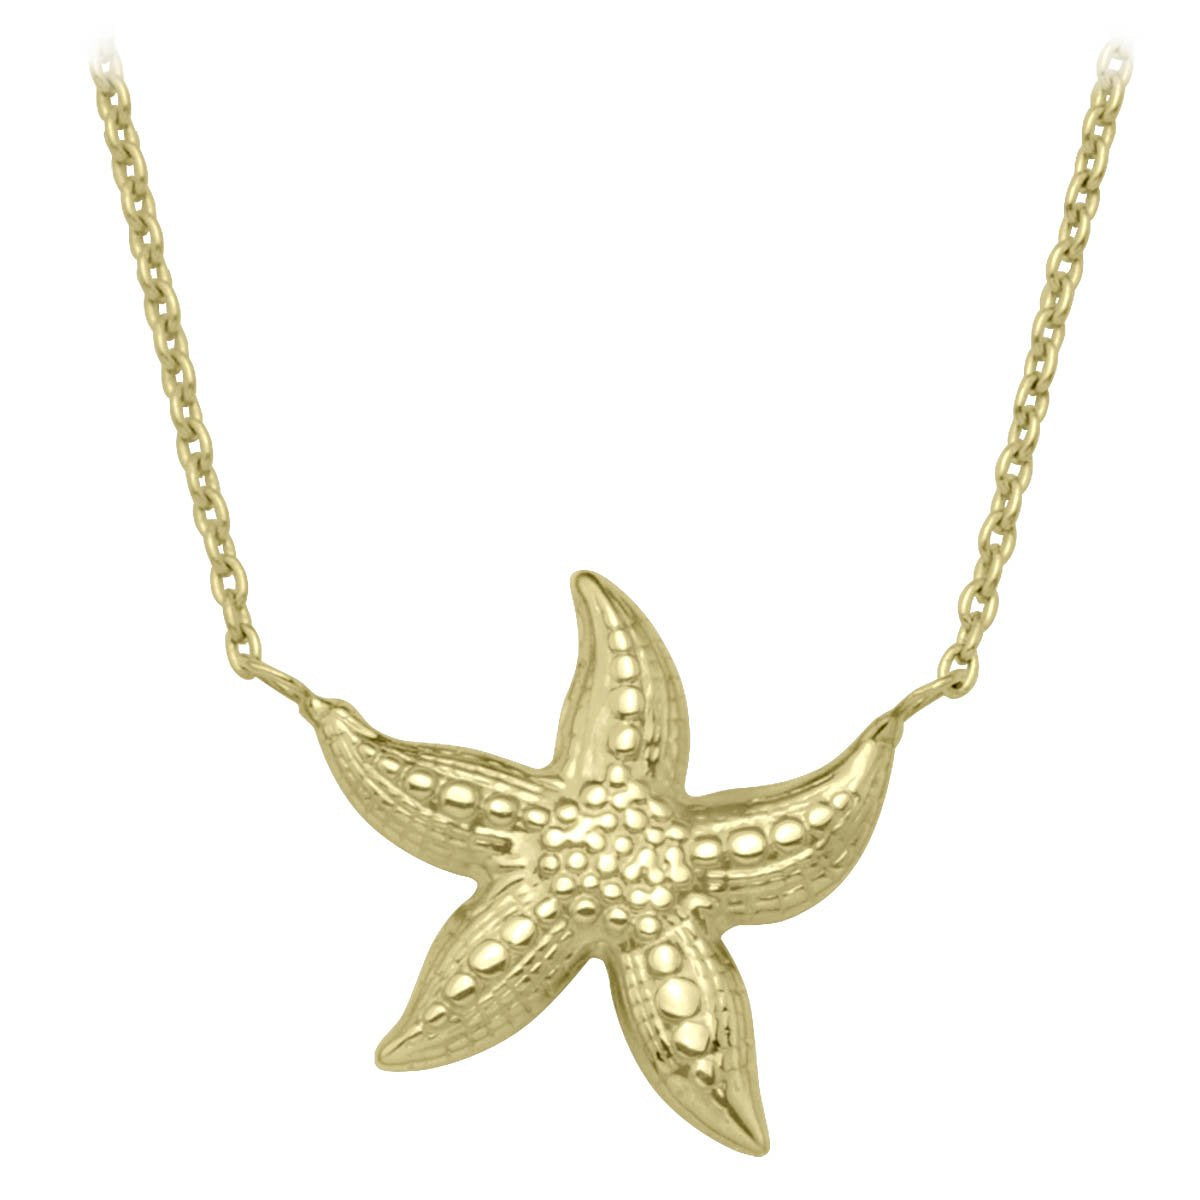 NECKALES YELLOW GOLD STAR FISH 